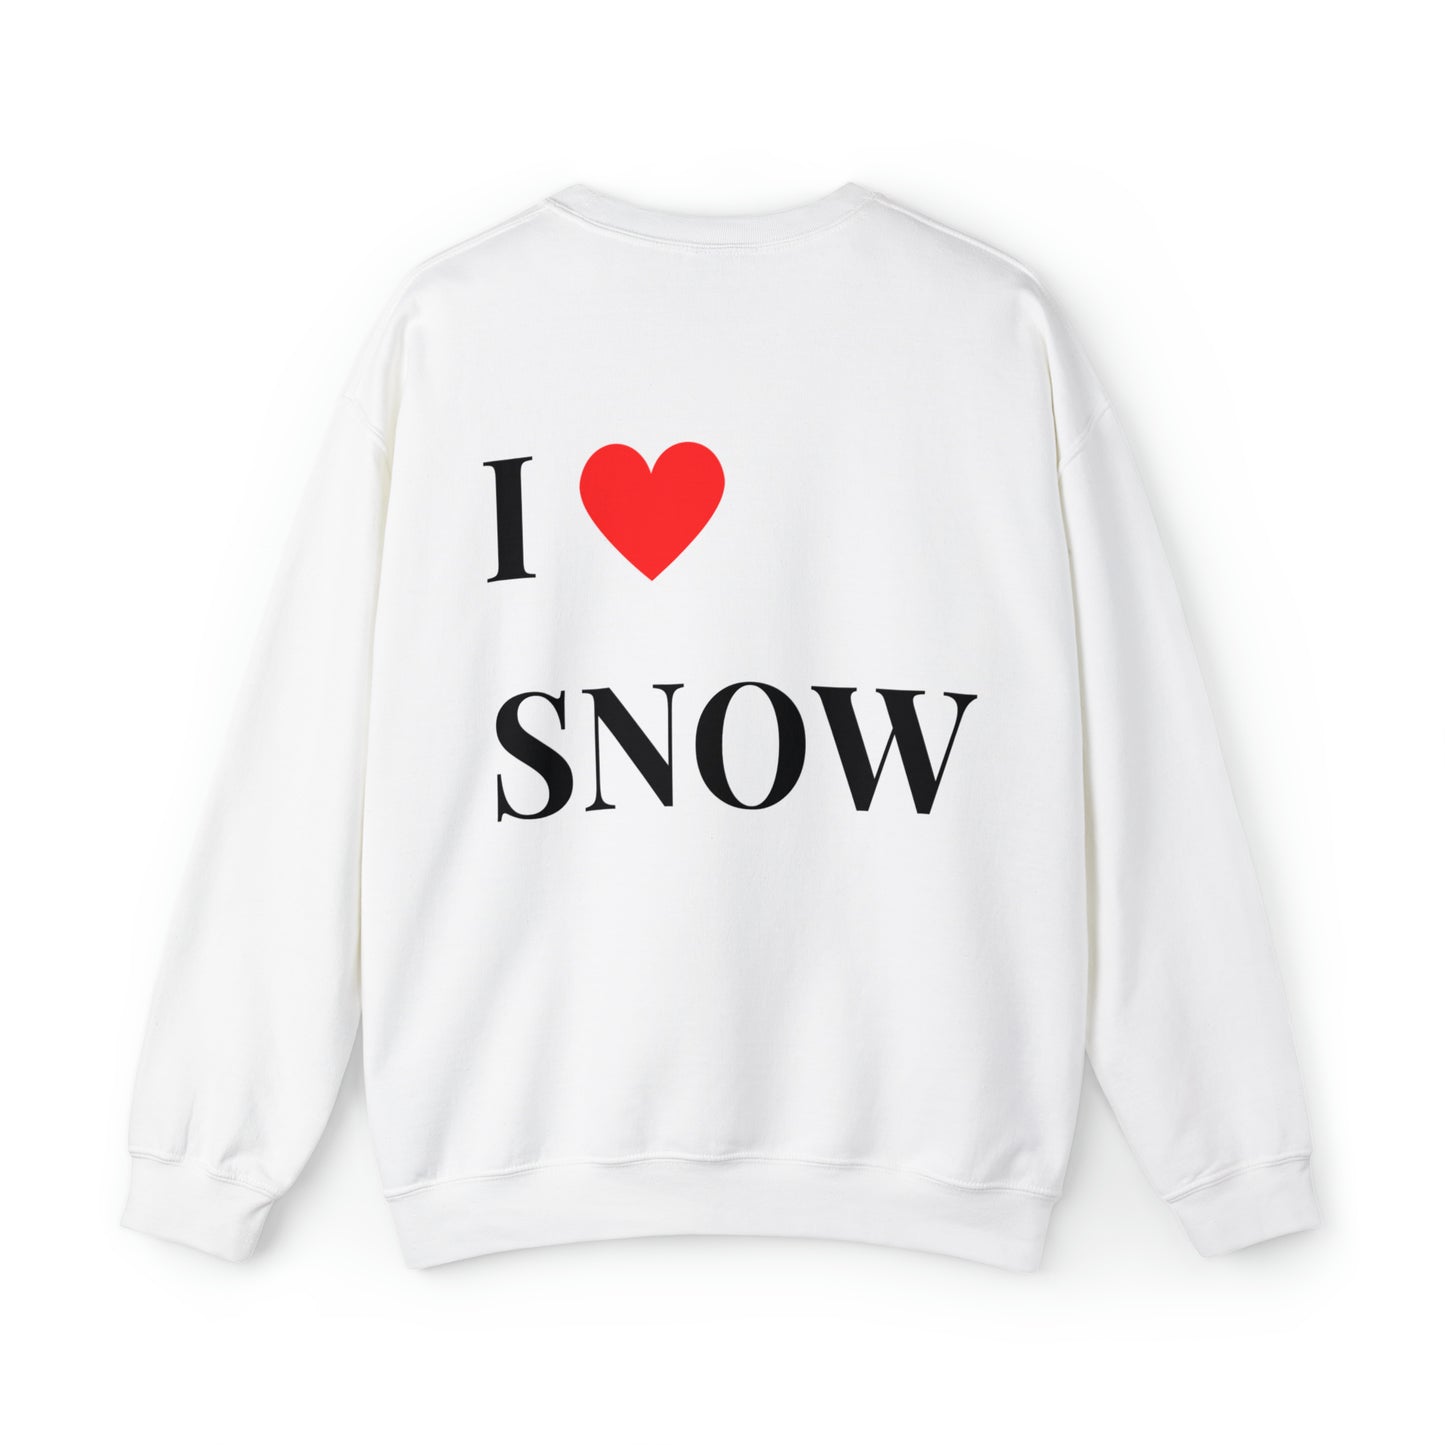 I Love Snow sweatshirt